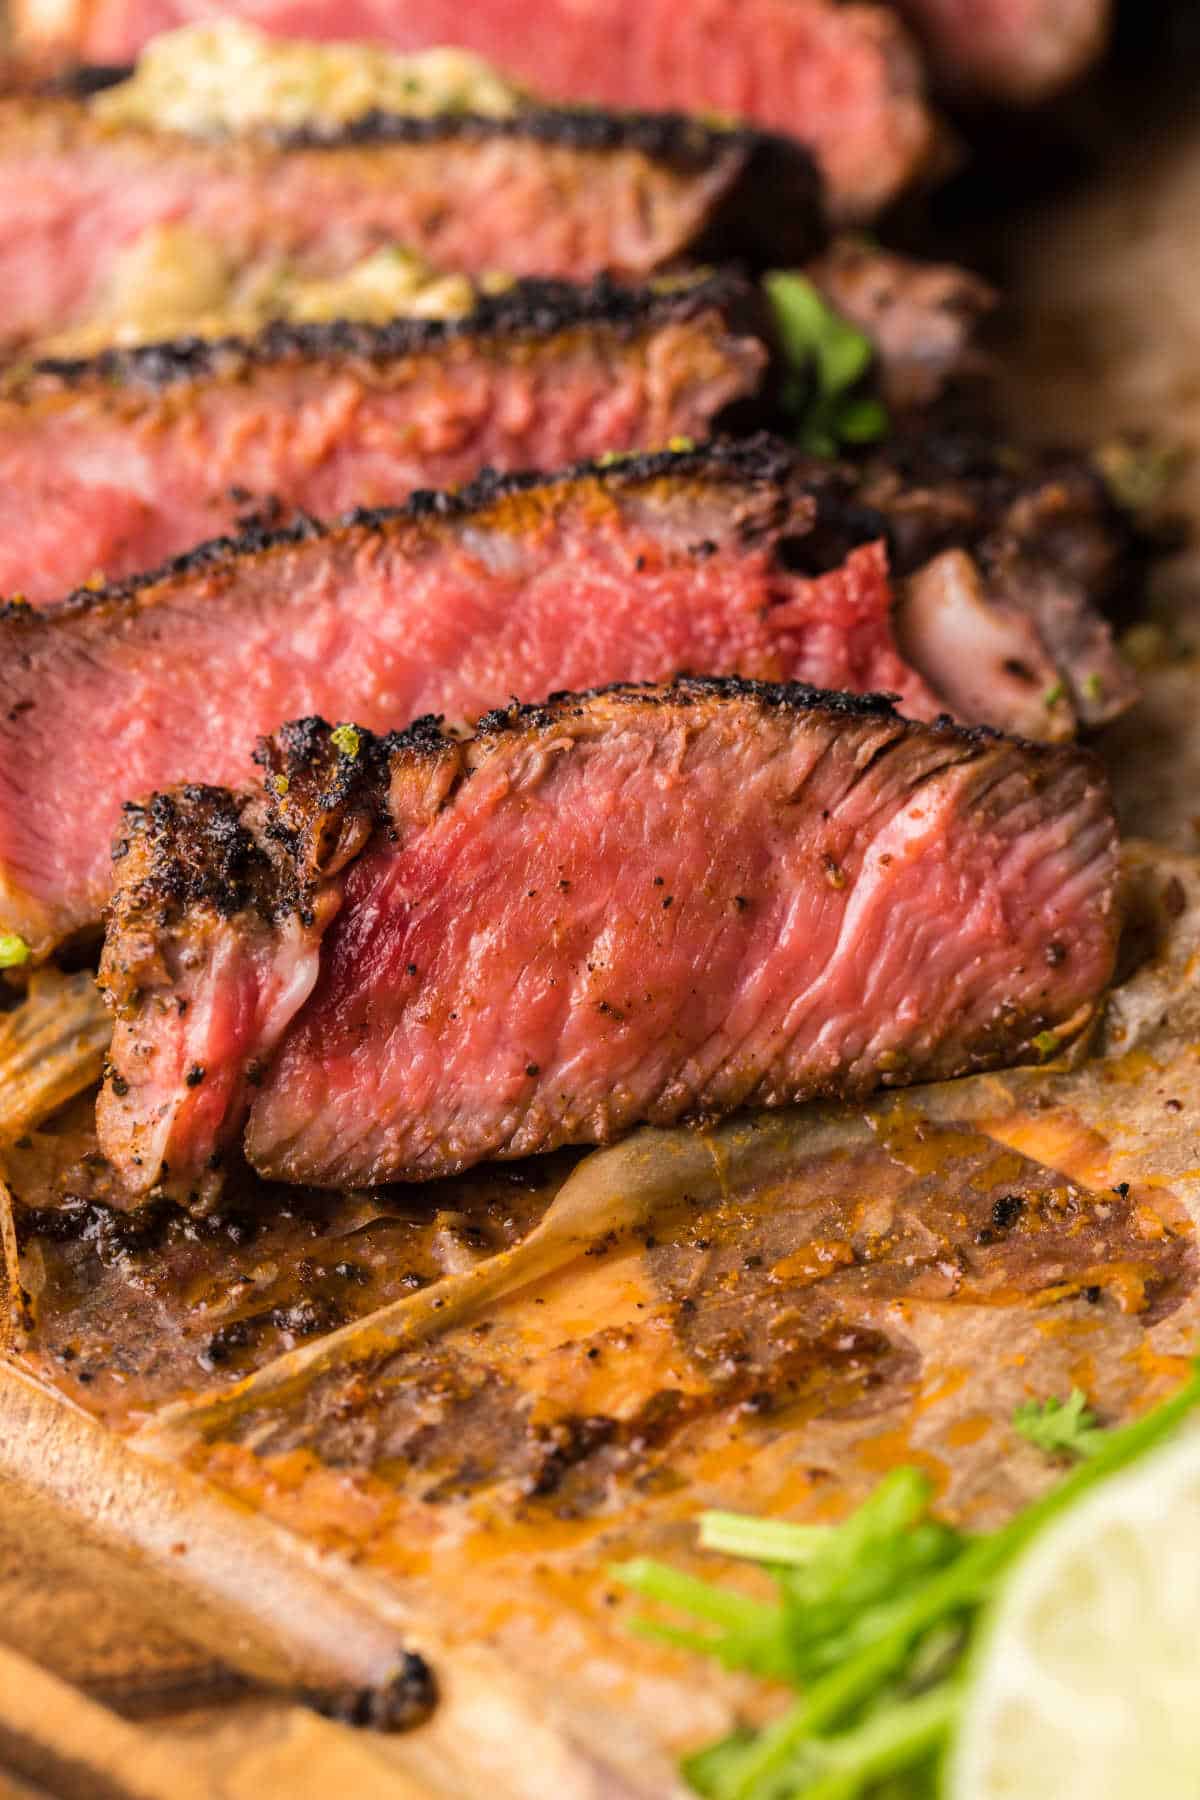 Blackened steak cut into thin slices.